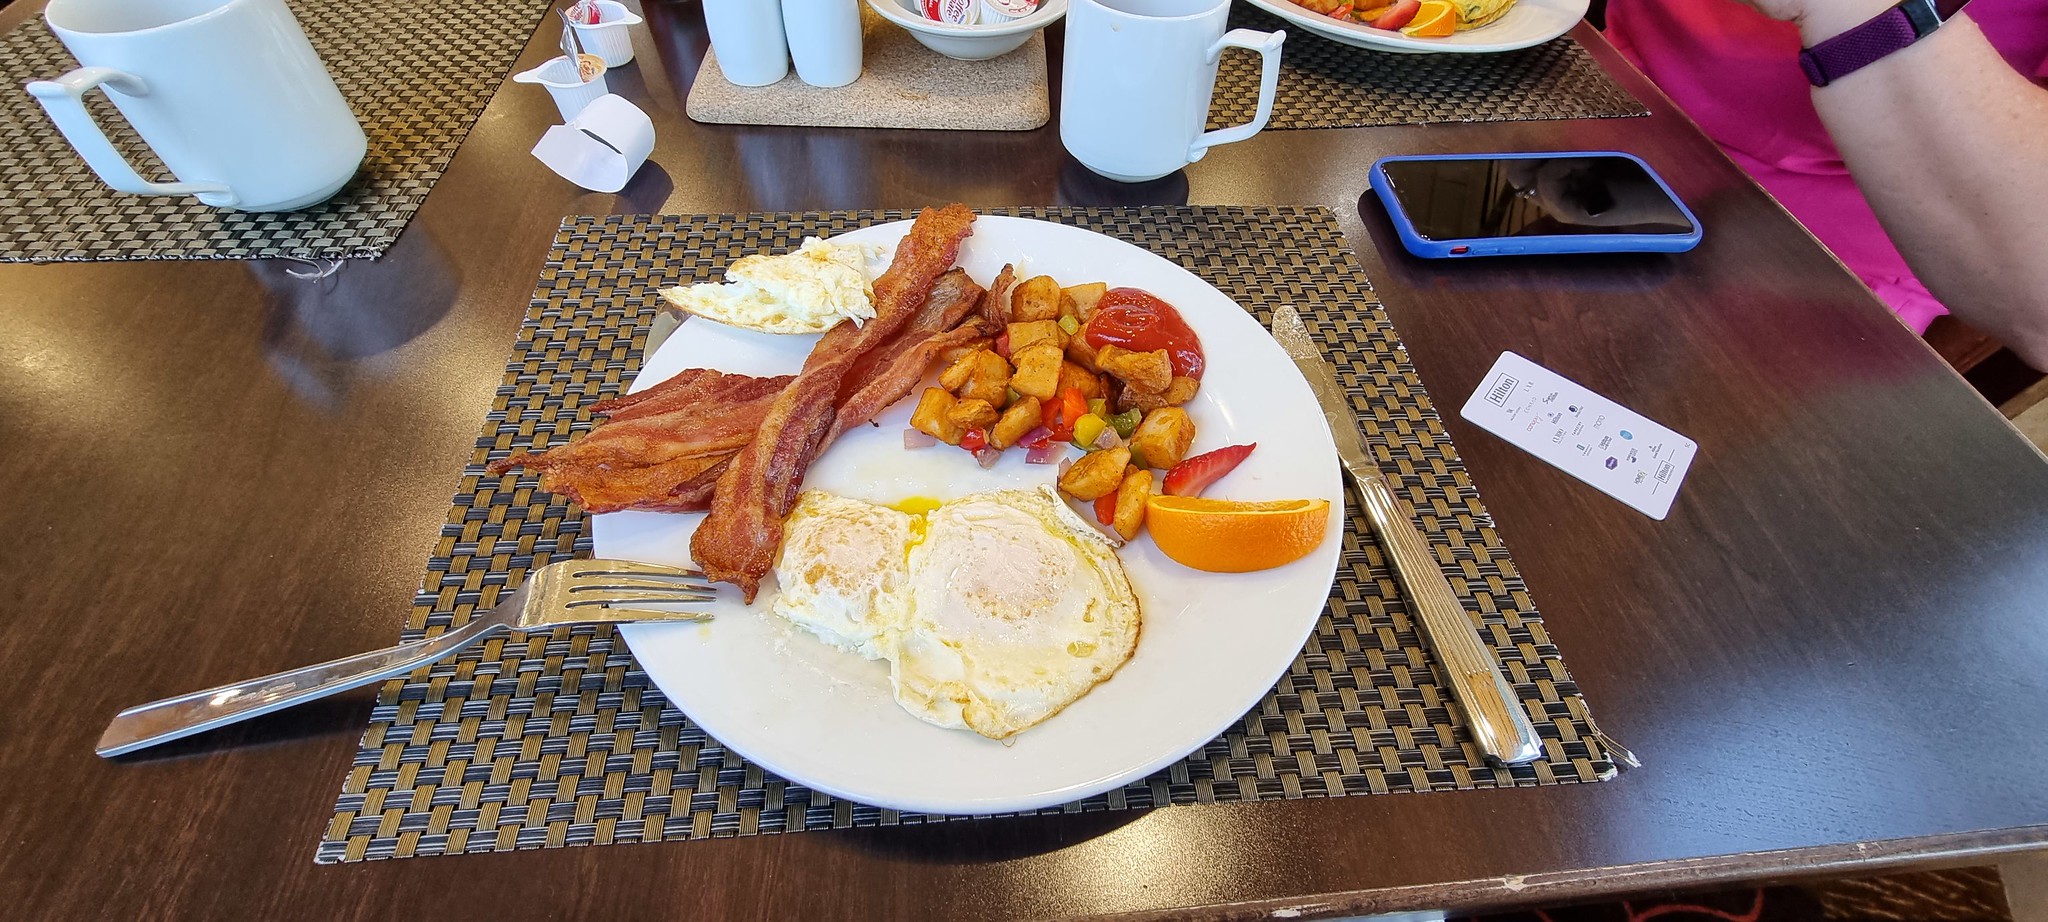 Breakfast at the Hilton Garden Inn in Las Vegas